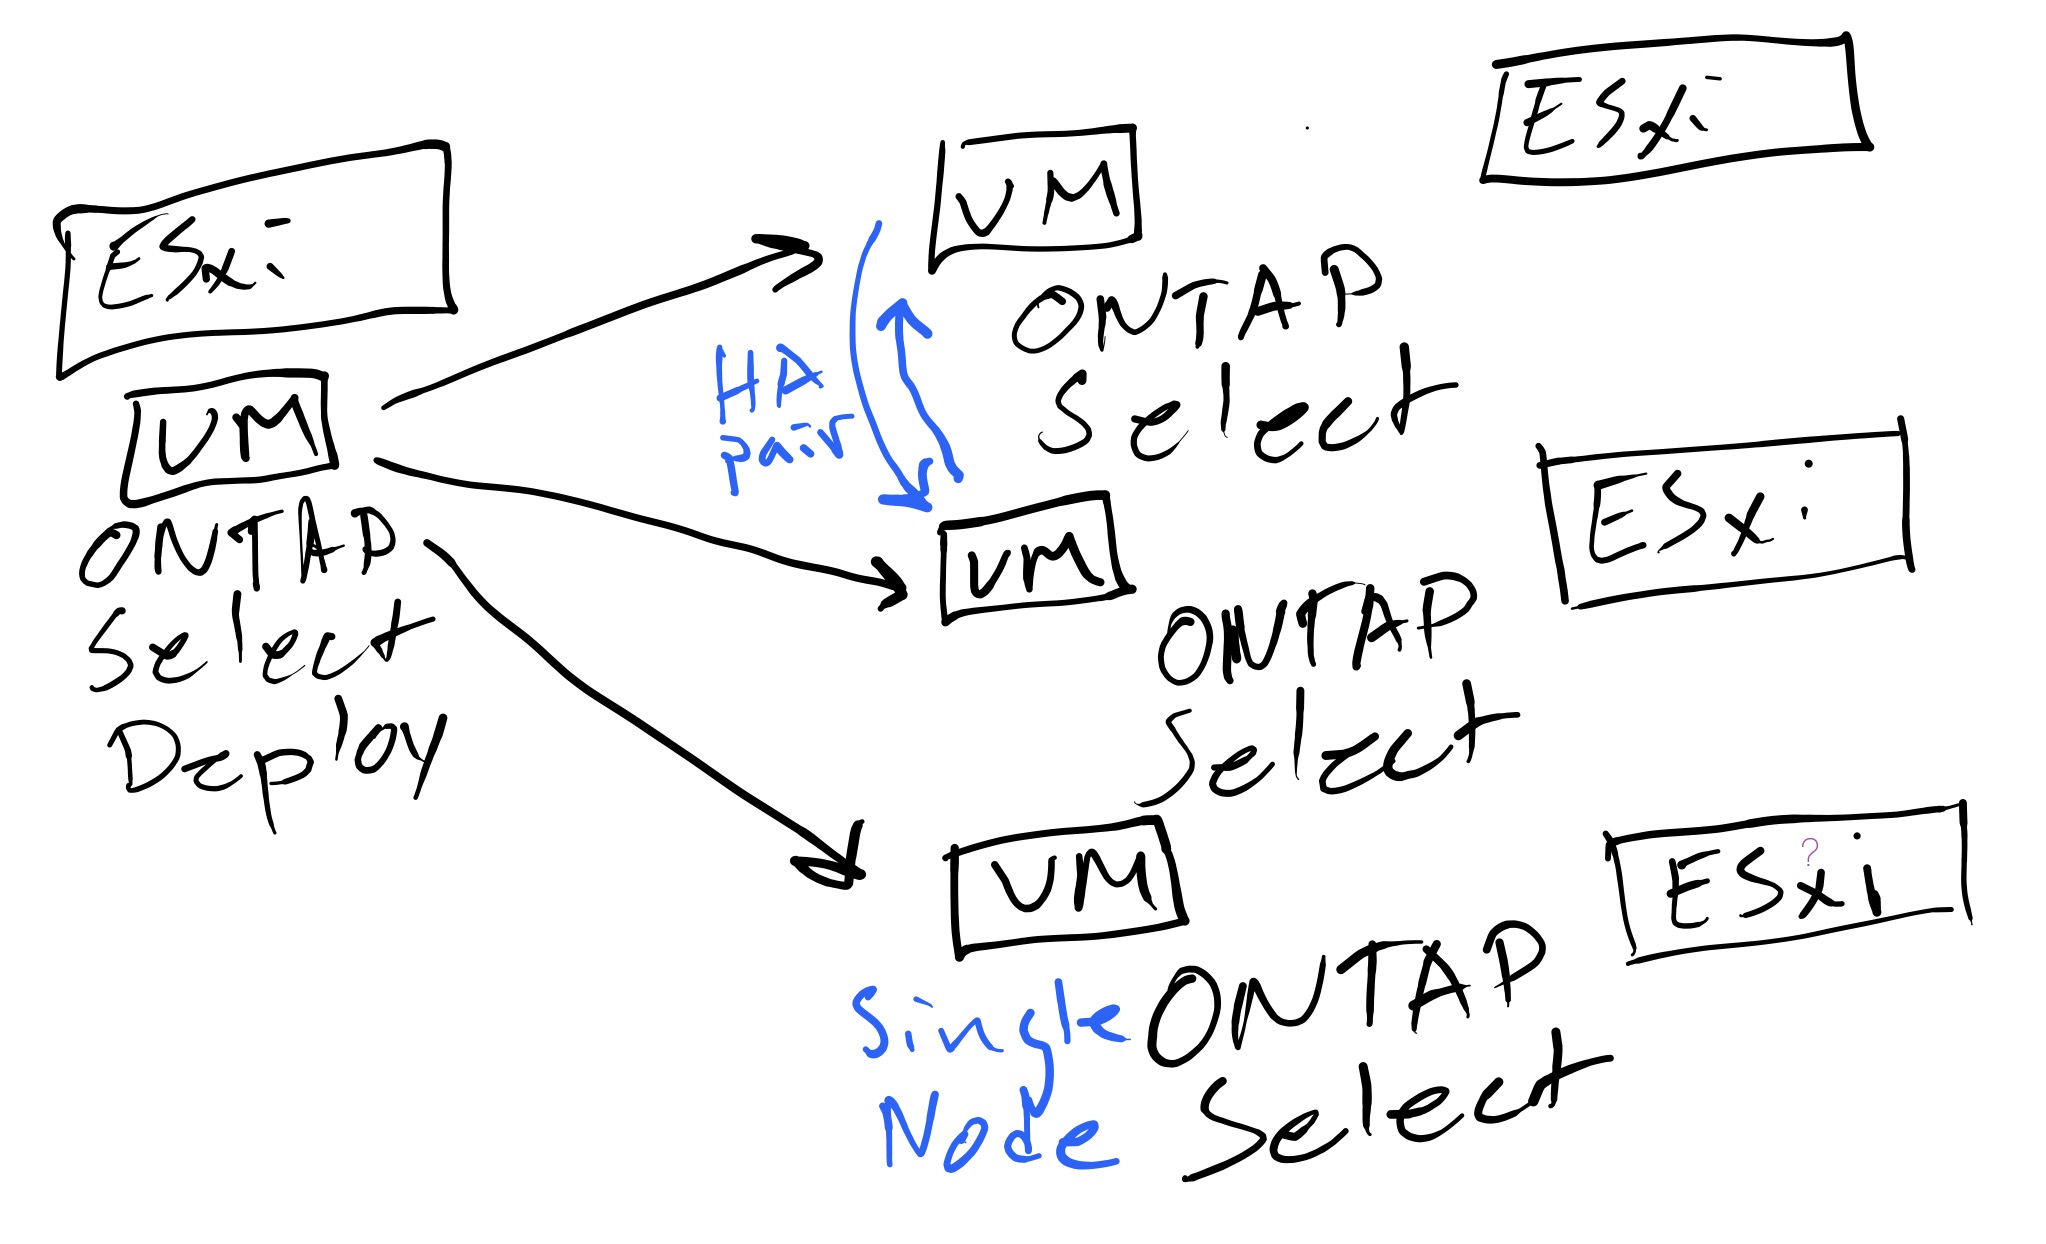 ONTAP Select Deploy VM